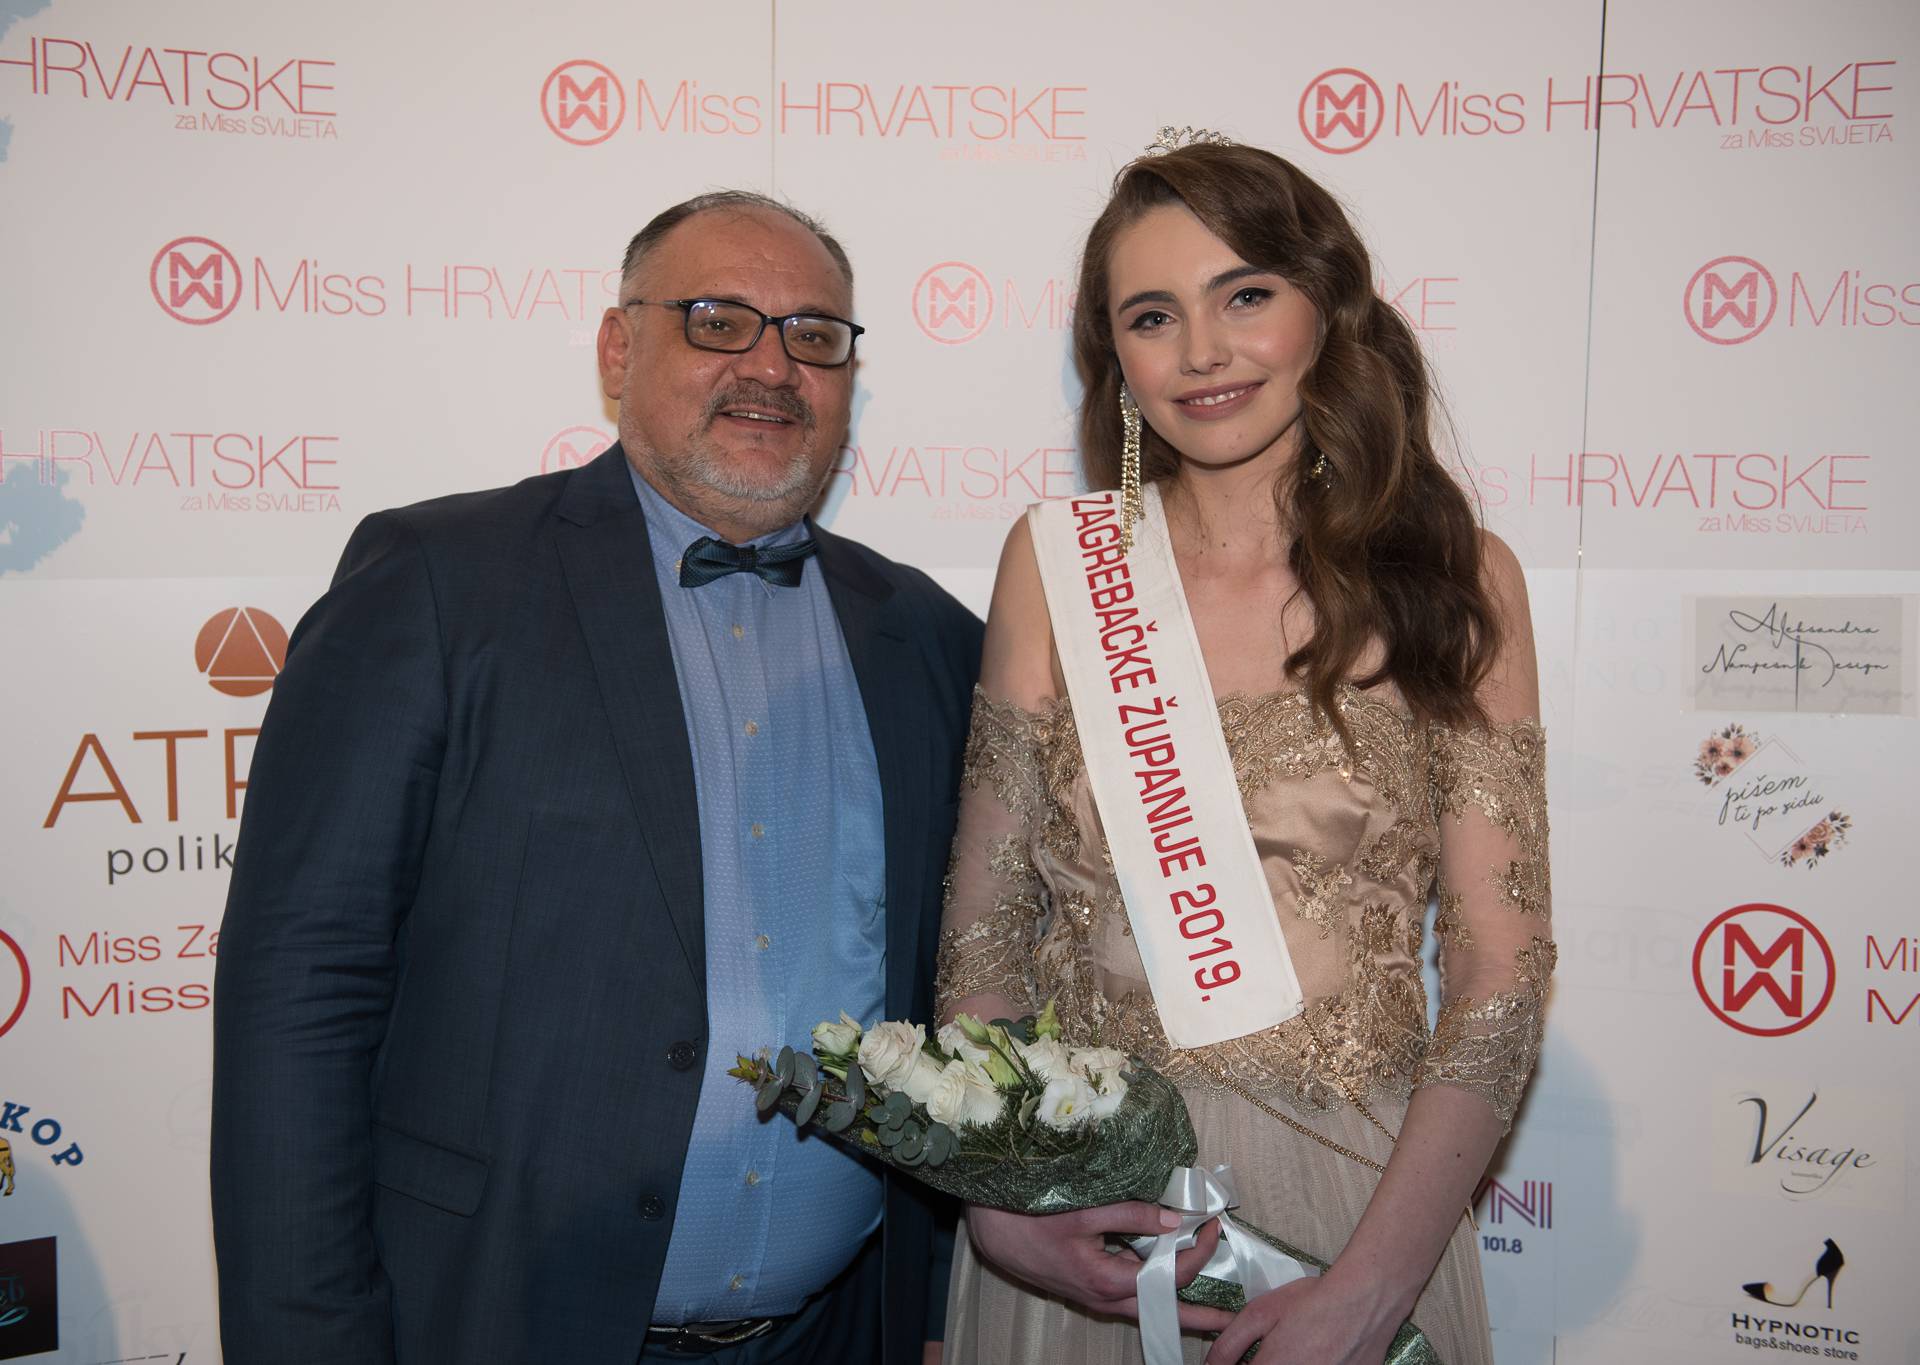 Nova Miss Zagrebačke županije je srednjoškolka Sara Siladji